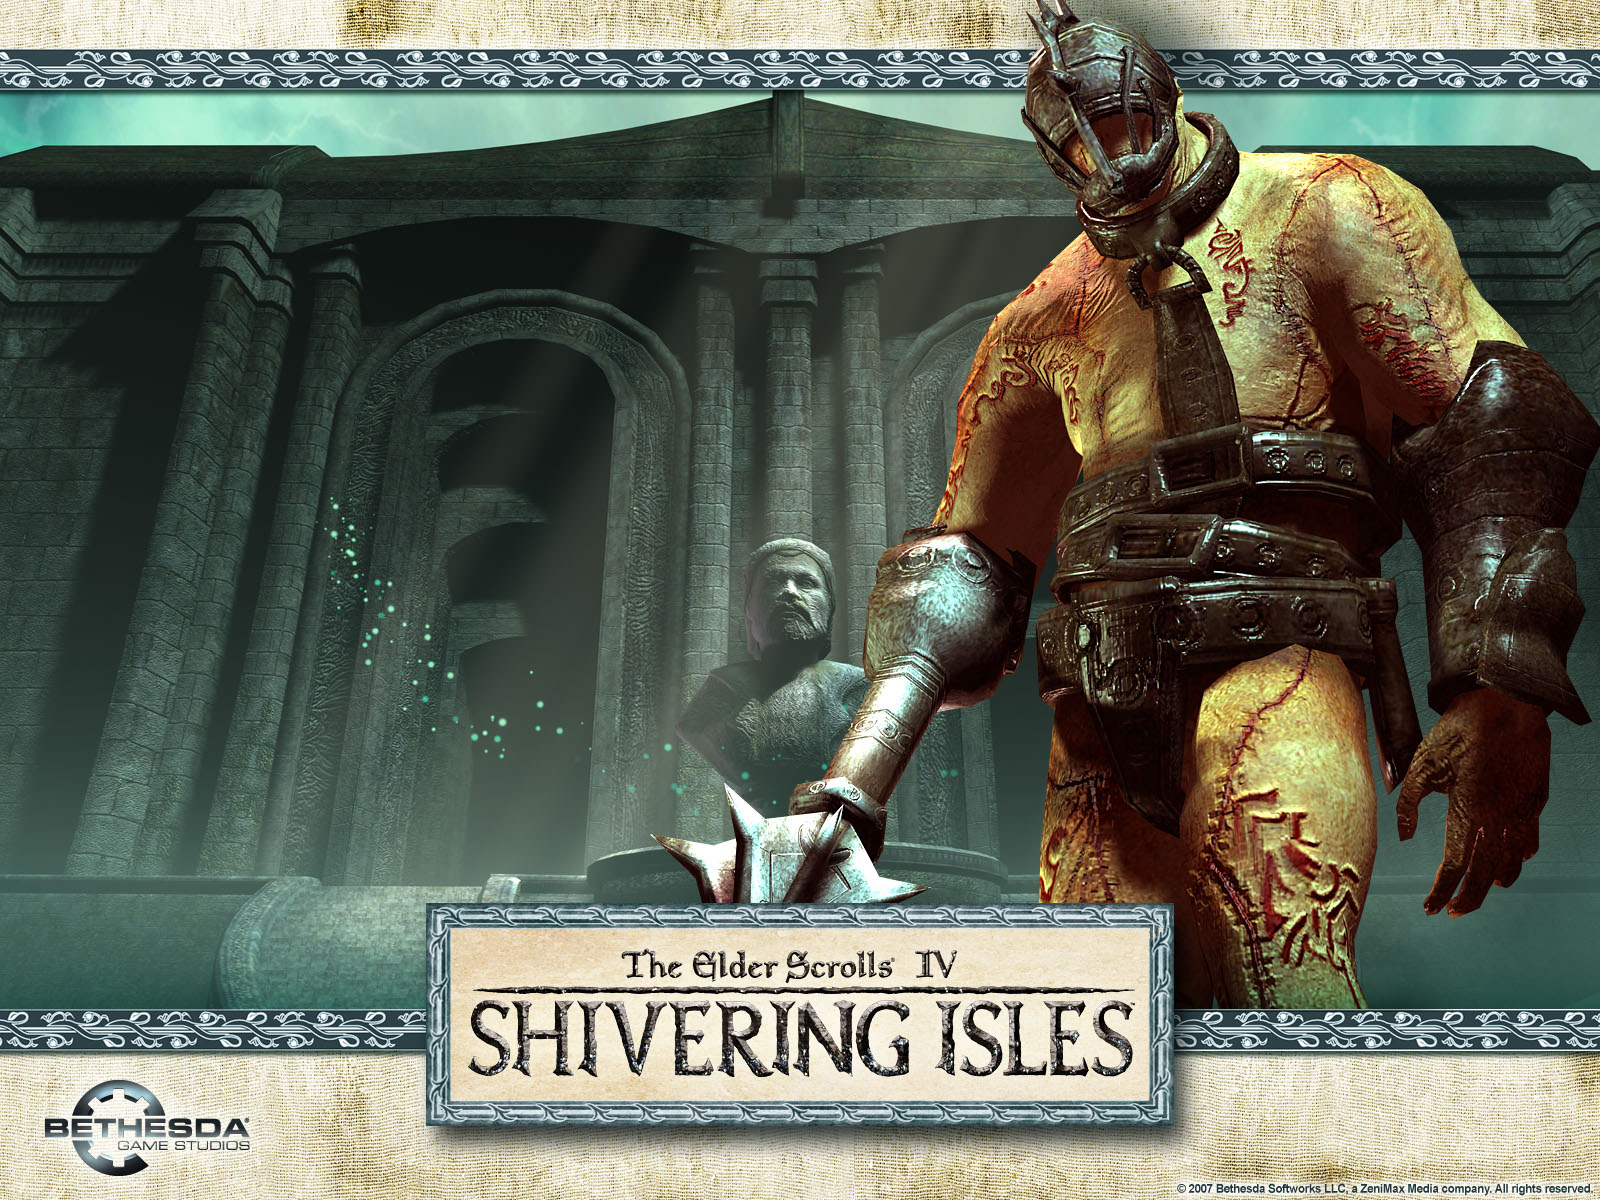 The_Elder_Scrolls_IV_Shivering_Isles_04_1600x1200.jpg